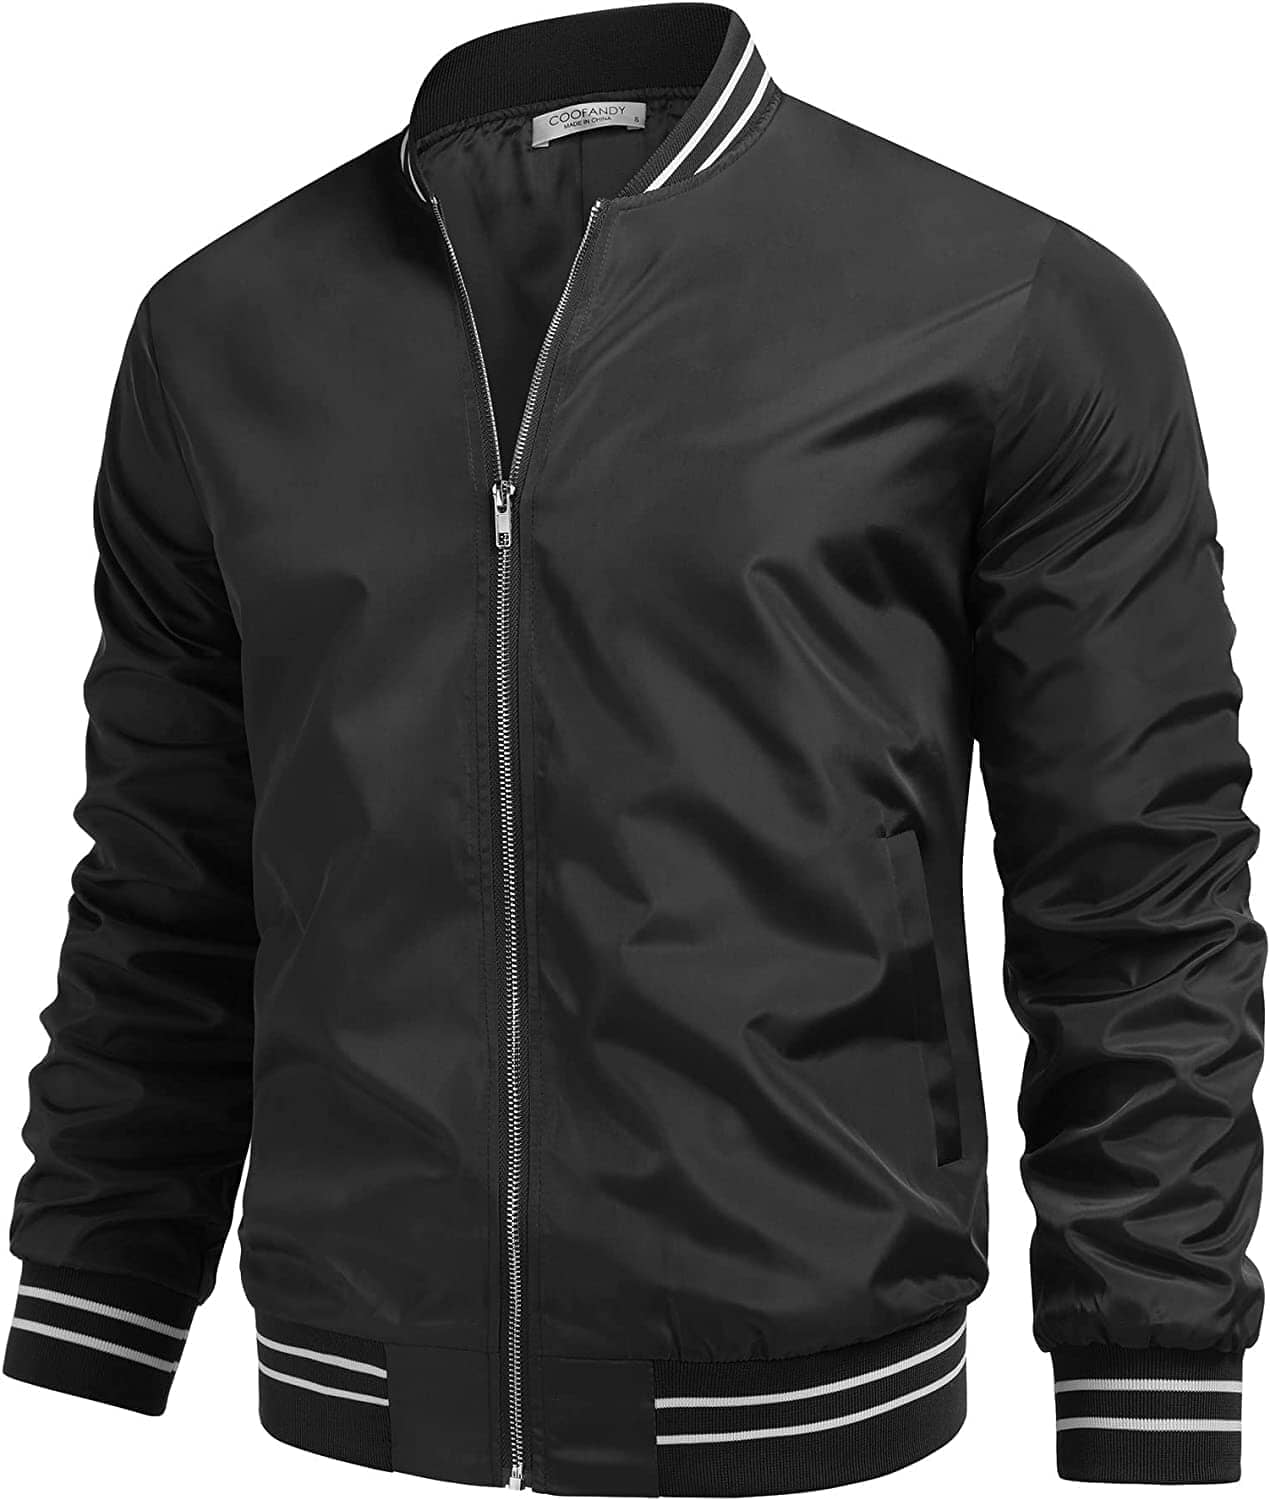 Lightweight Windbreaker Full Zip Jacket (US Only) Jackets COOFANDY Store Black S 